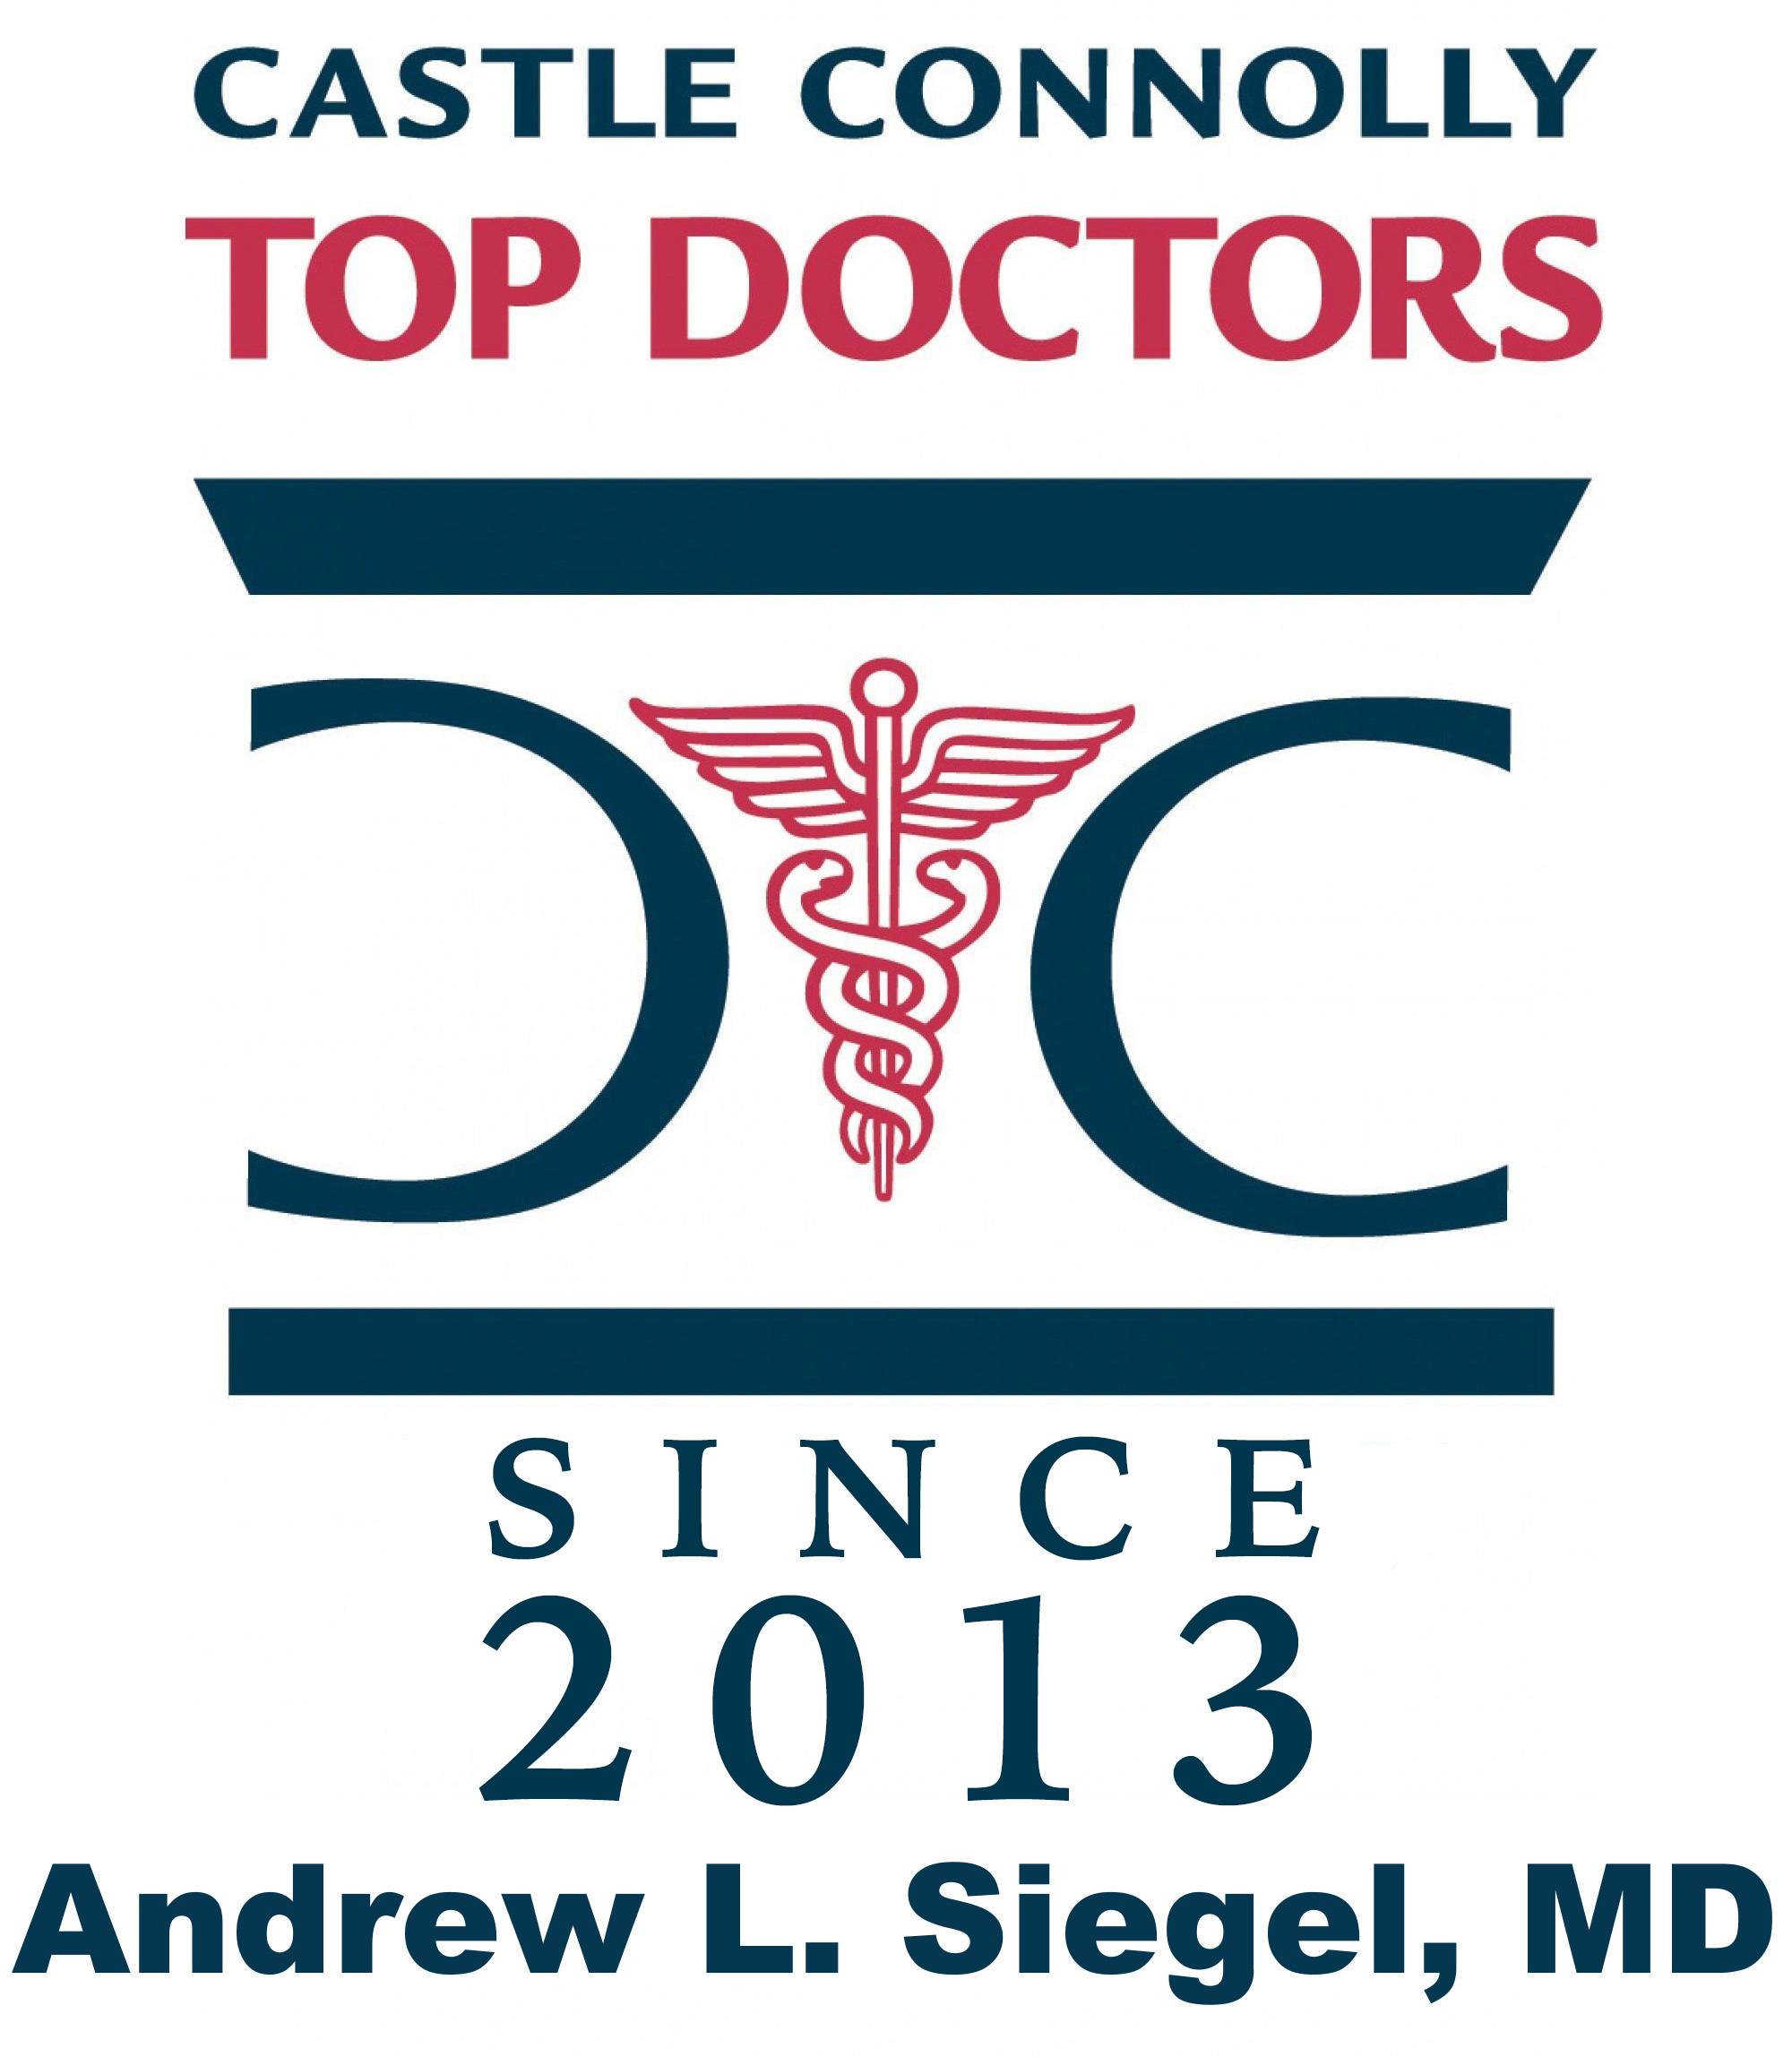 Dr. Andrew Siegel - Top Doctors Logo Since 2013